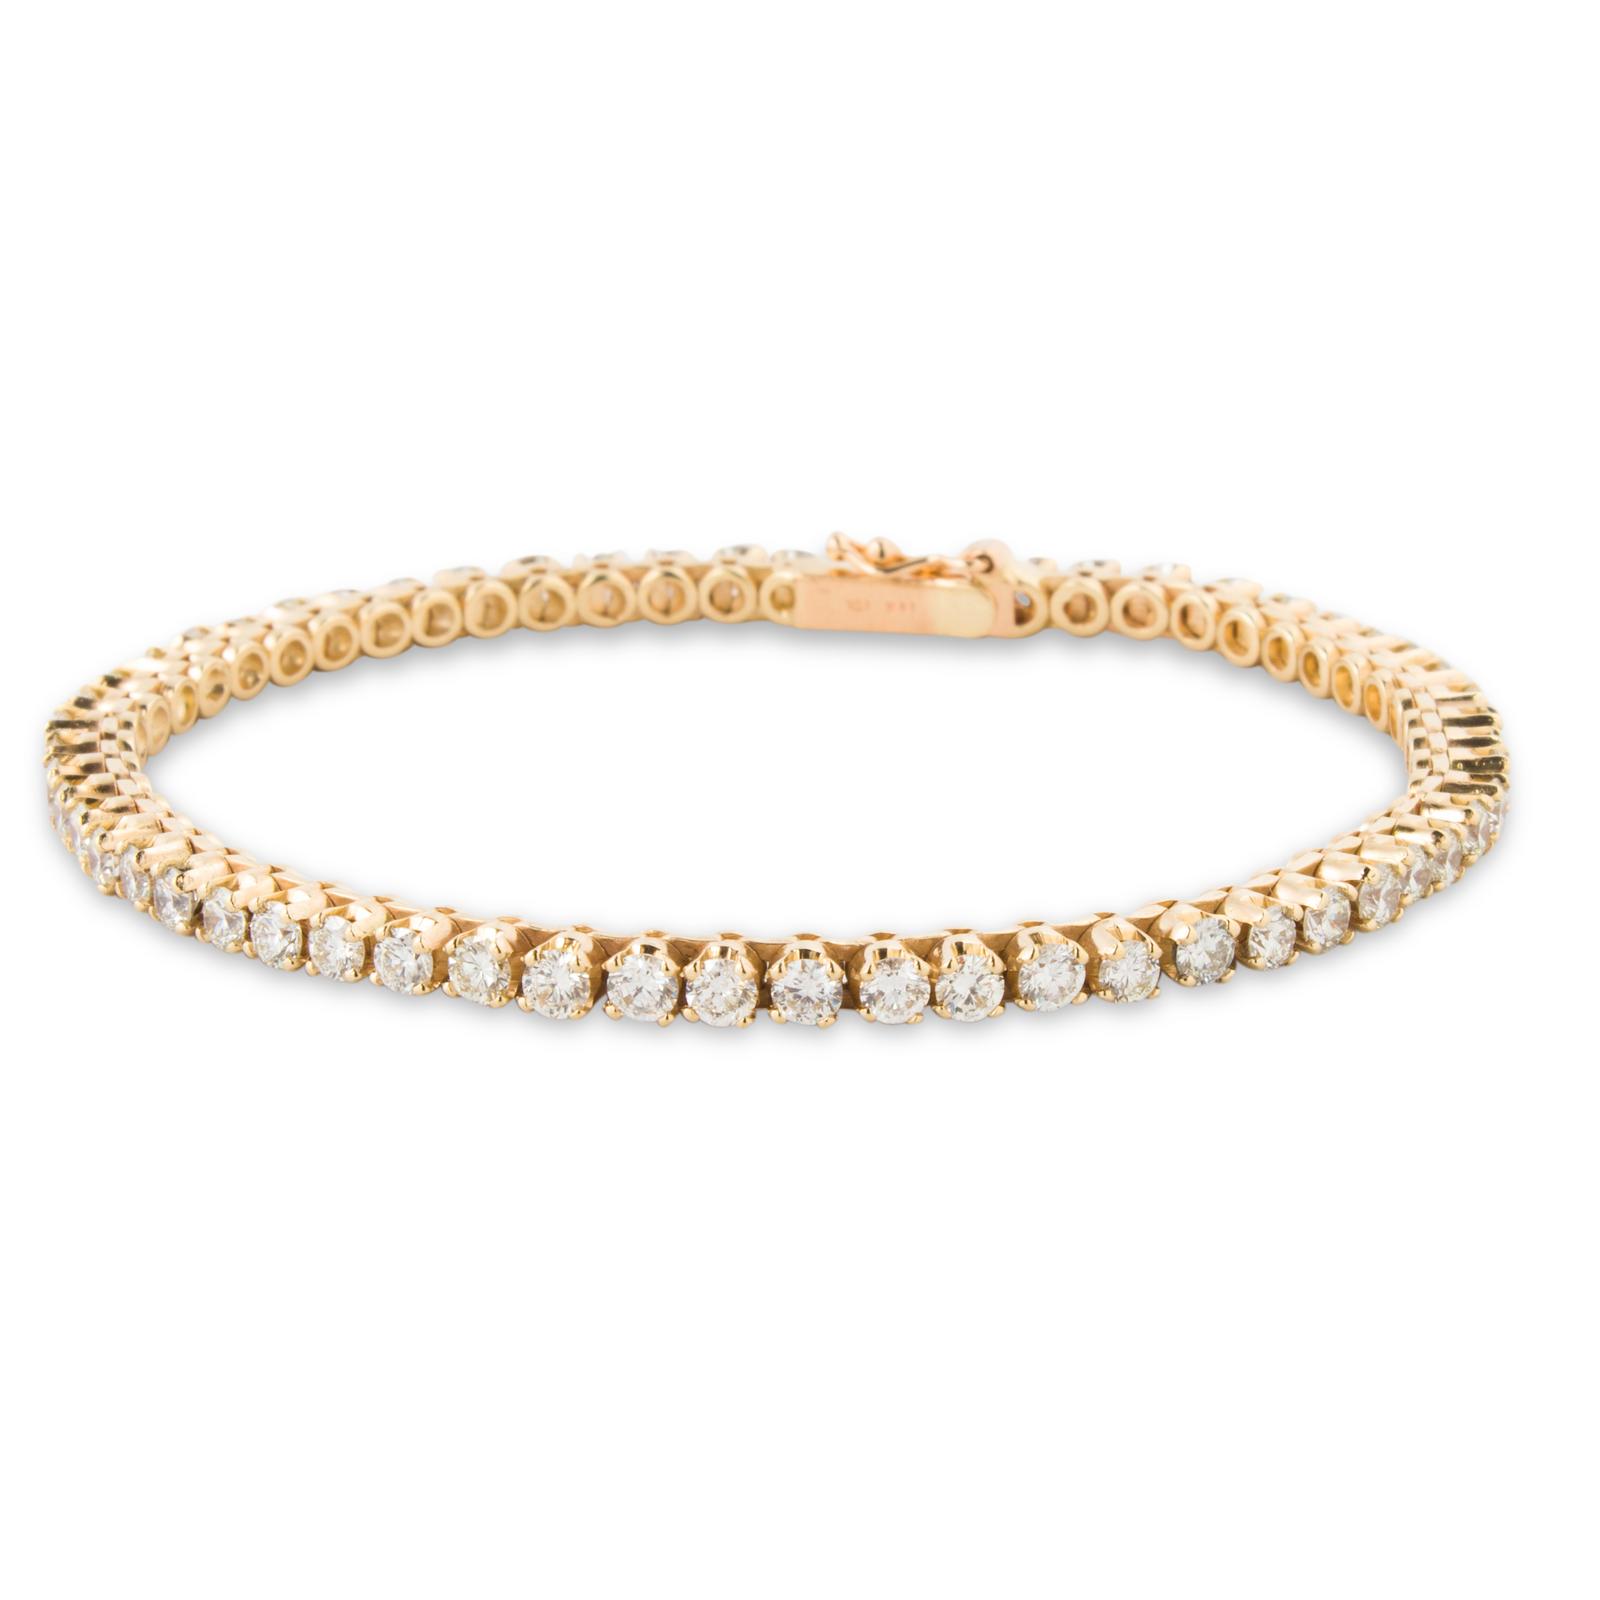 A diamond and fourteen karat gold bracelet | Clars Auction Gallery